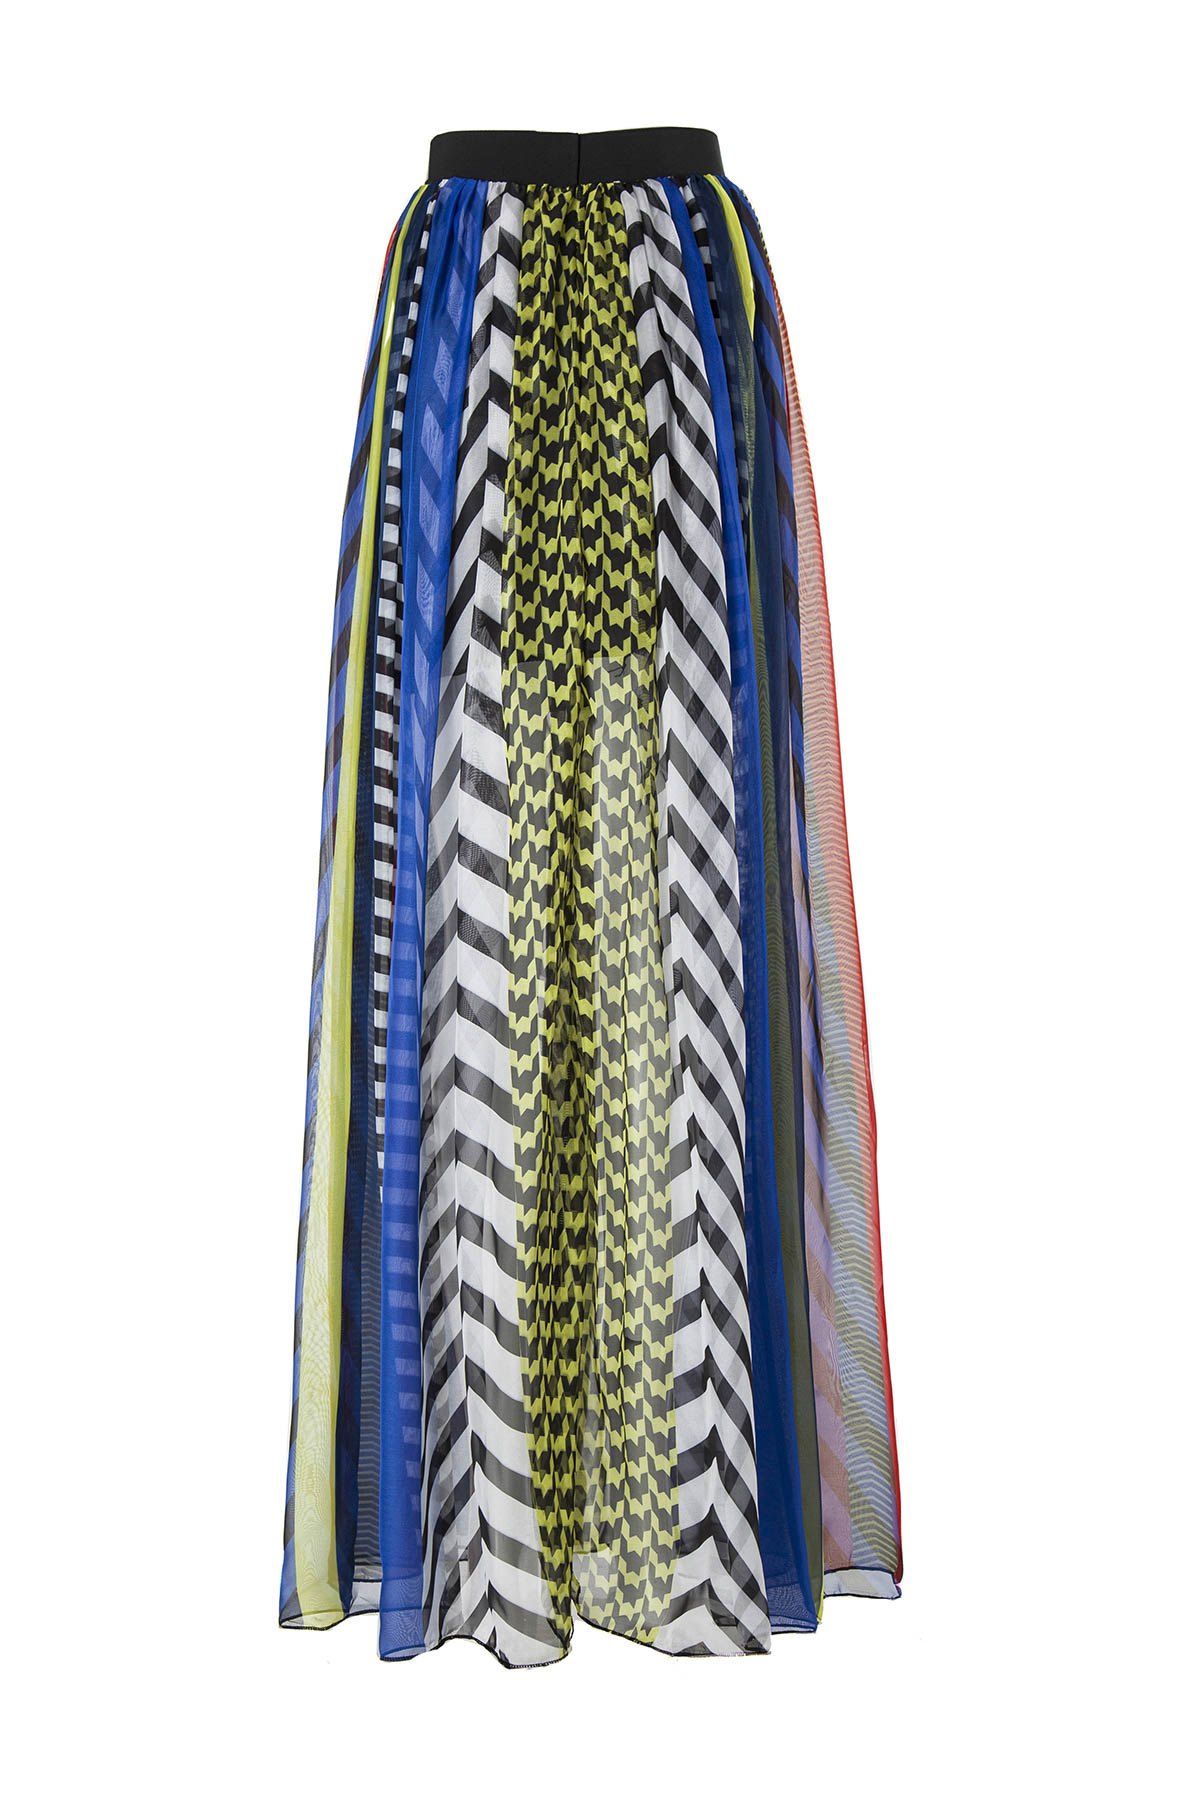 [17% OFF] 2020 Fashionable Colorful Striped Polka Dot Chiffon Women's ...